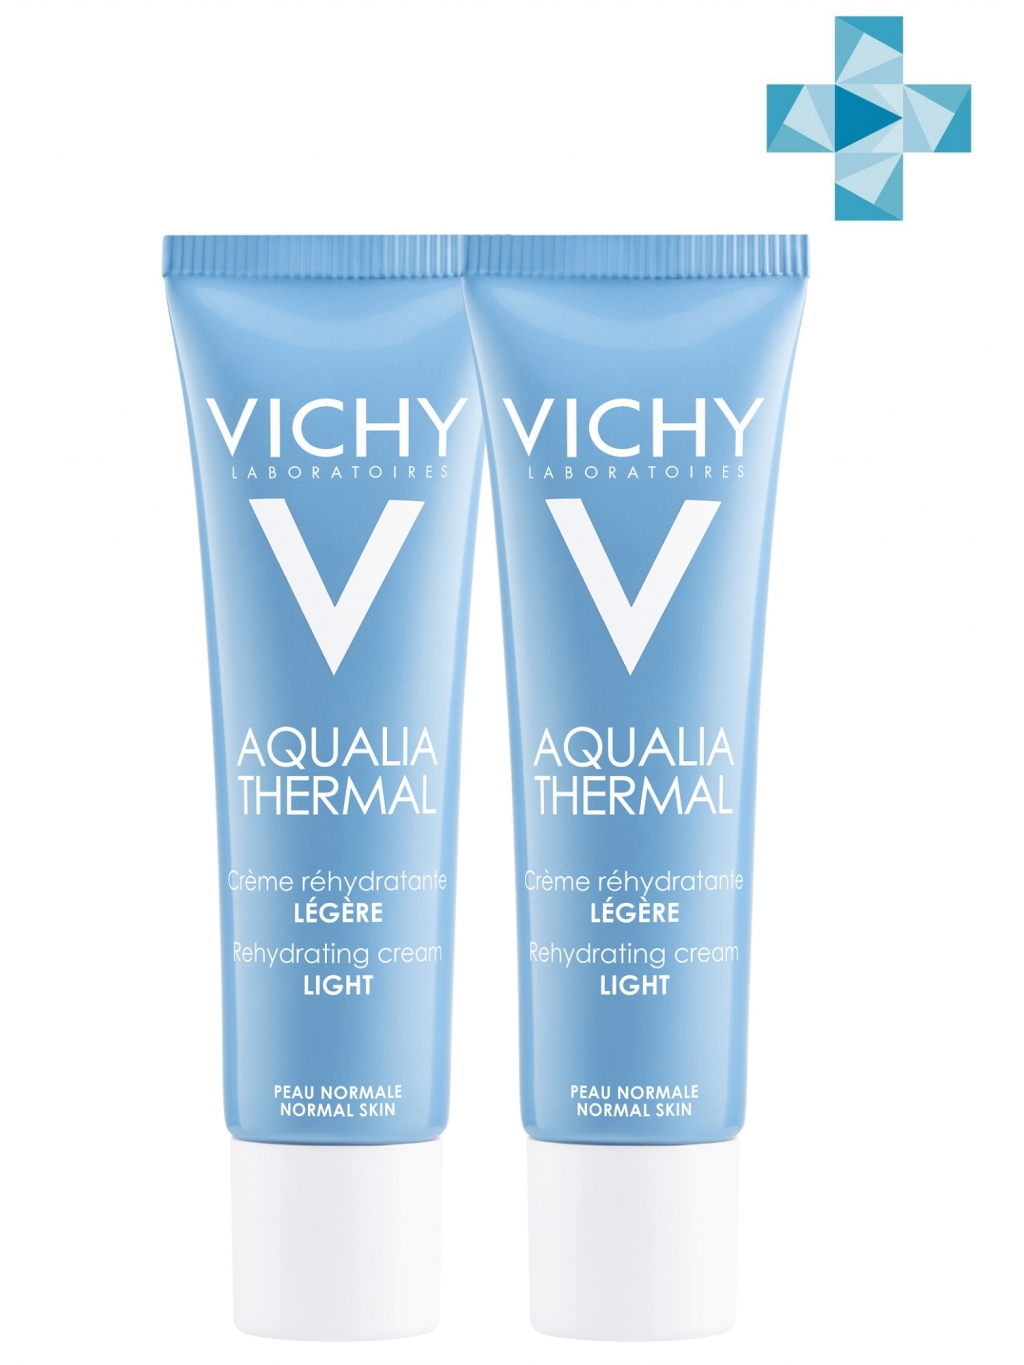 Vichy Комплект Aqualia Thermal Legere Легкий крем для нормальной кожи, 2*30 мл (Vichy, Aqualia Thermal)